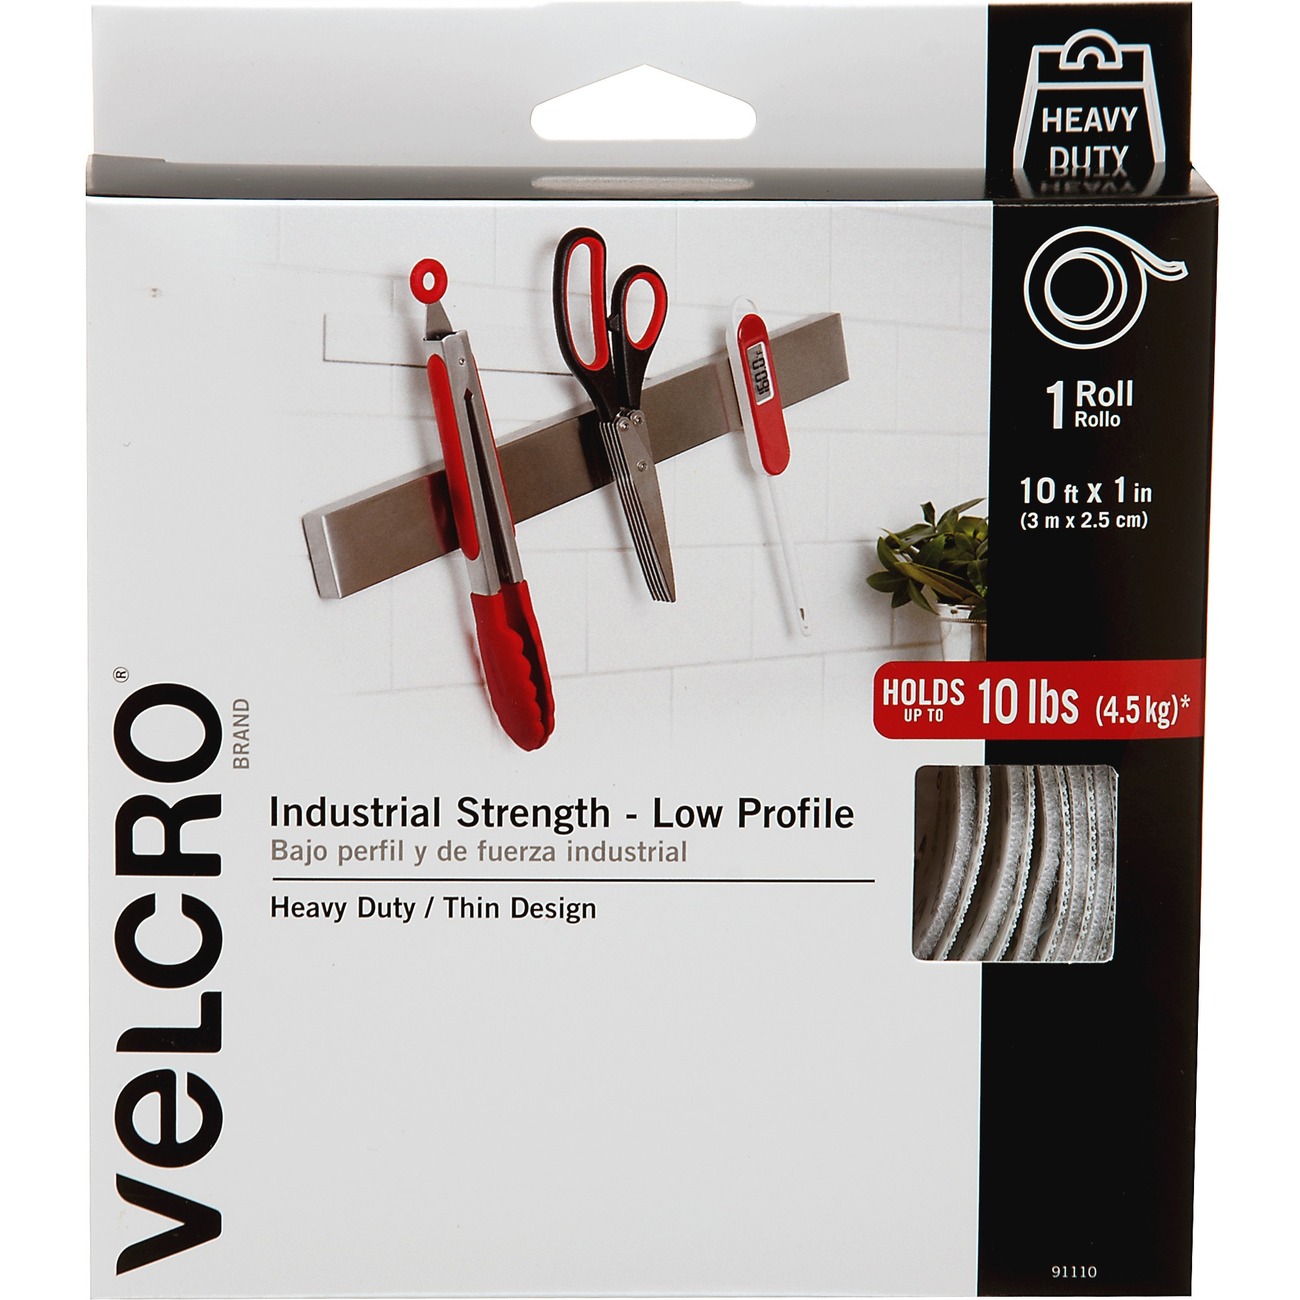 Buy the Velcro 90087 White Sticky Back Velcro Tape - 5' x 3/4